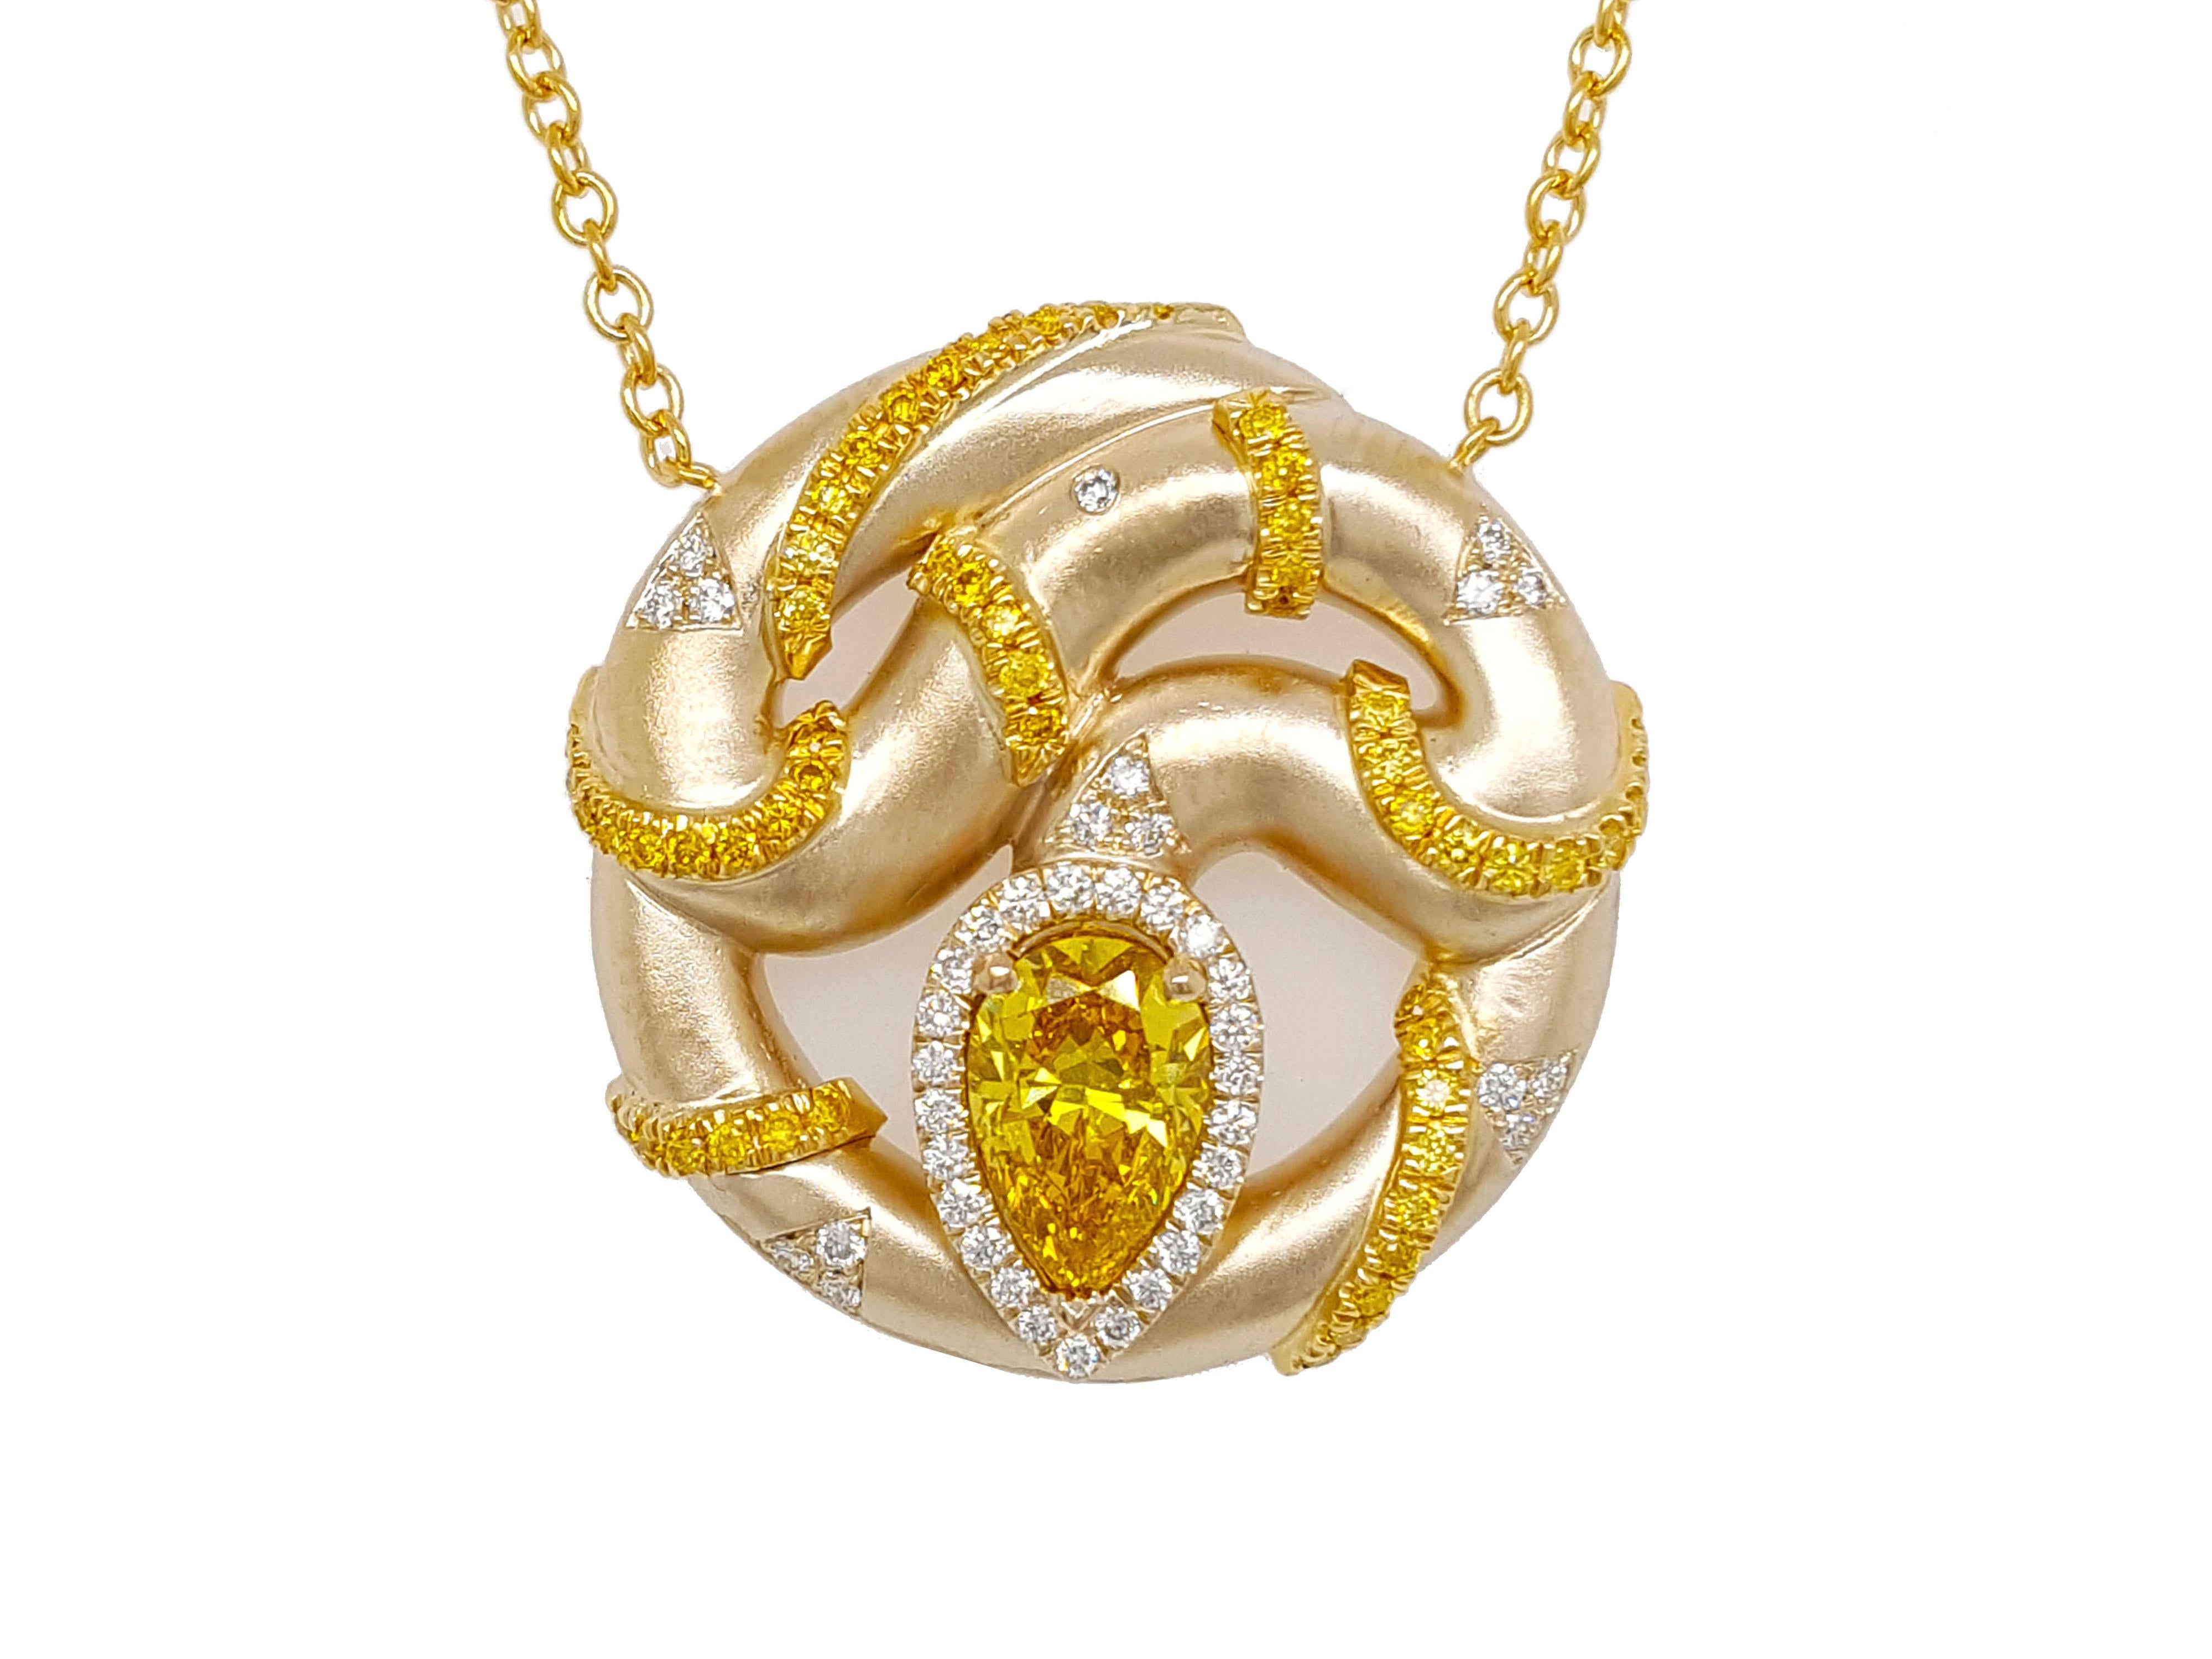 Pear Cut 1 Carat Fancy Vivid Yellow Diamond Pendant Necklace 18K Gold GIA Certified For Sale